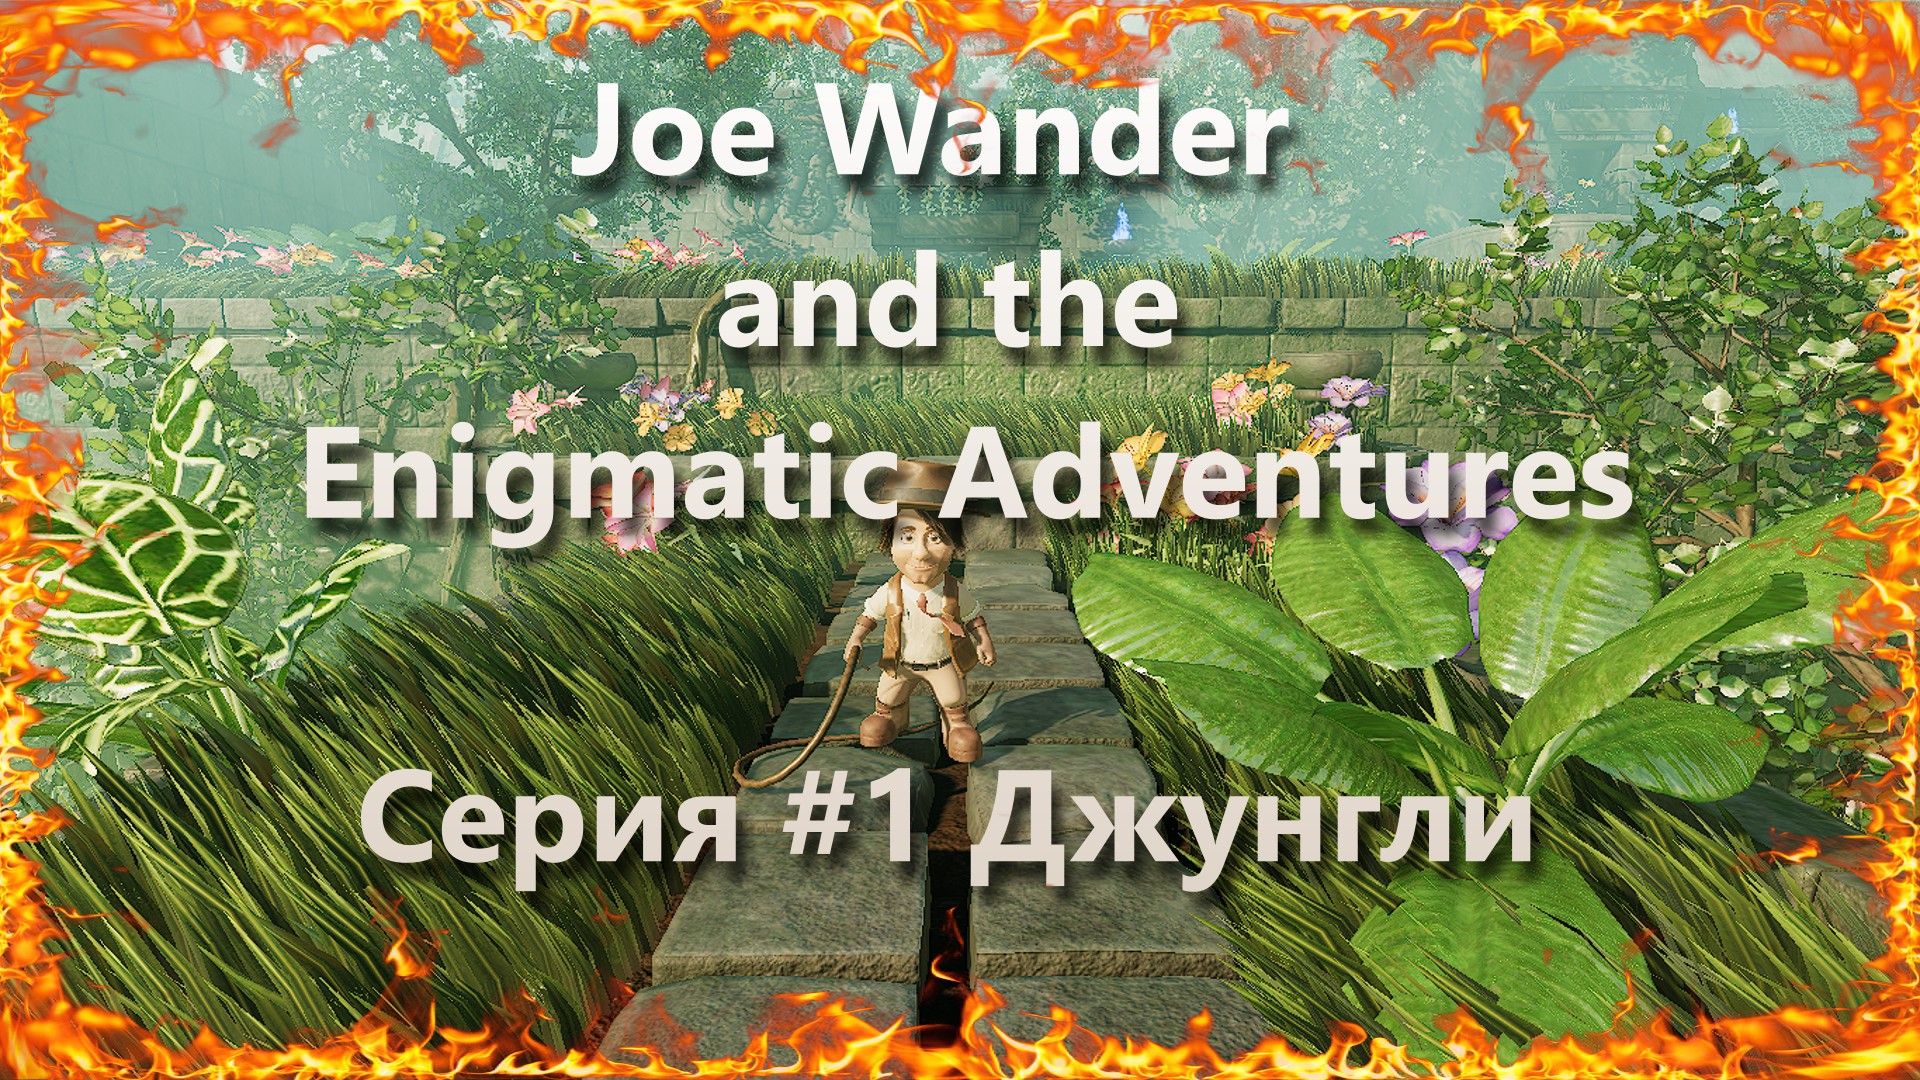 Joe Wander and the Enigmatic Adventures Серия #1 Джунгли